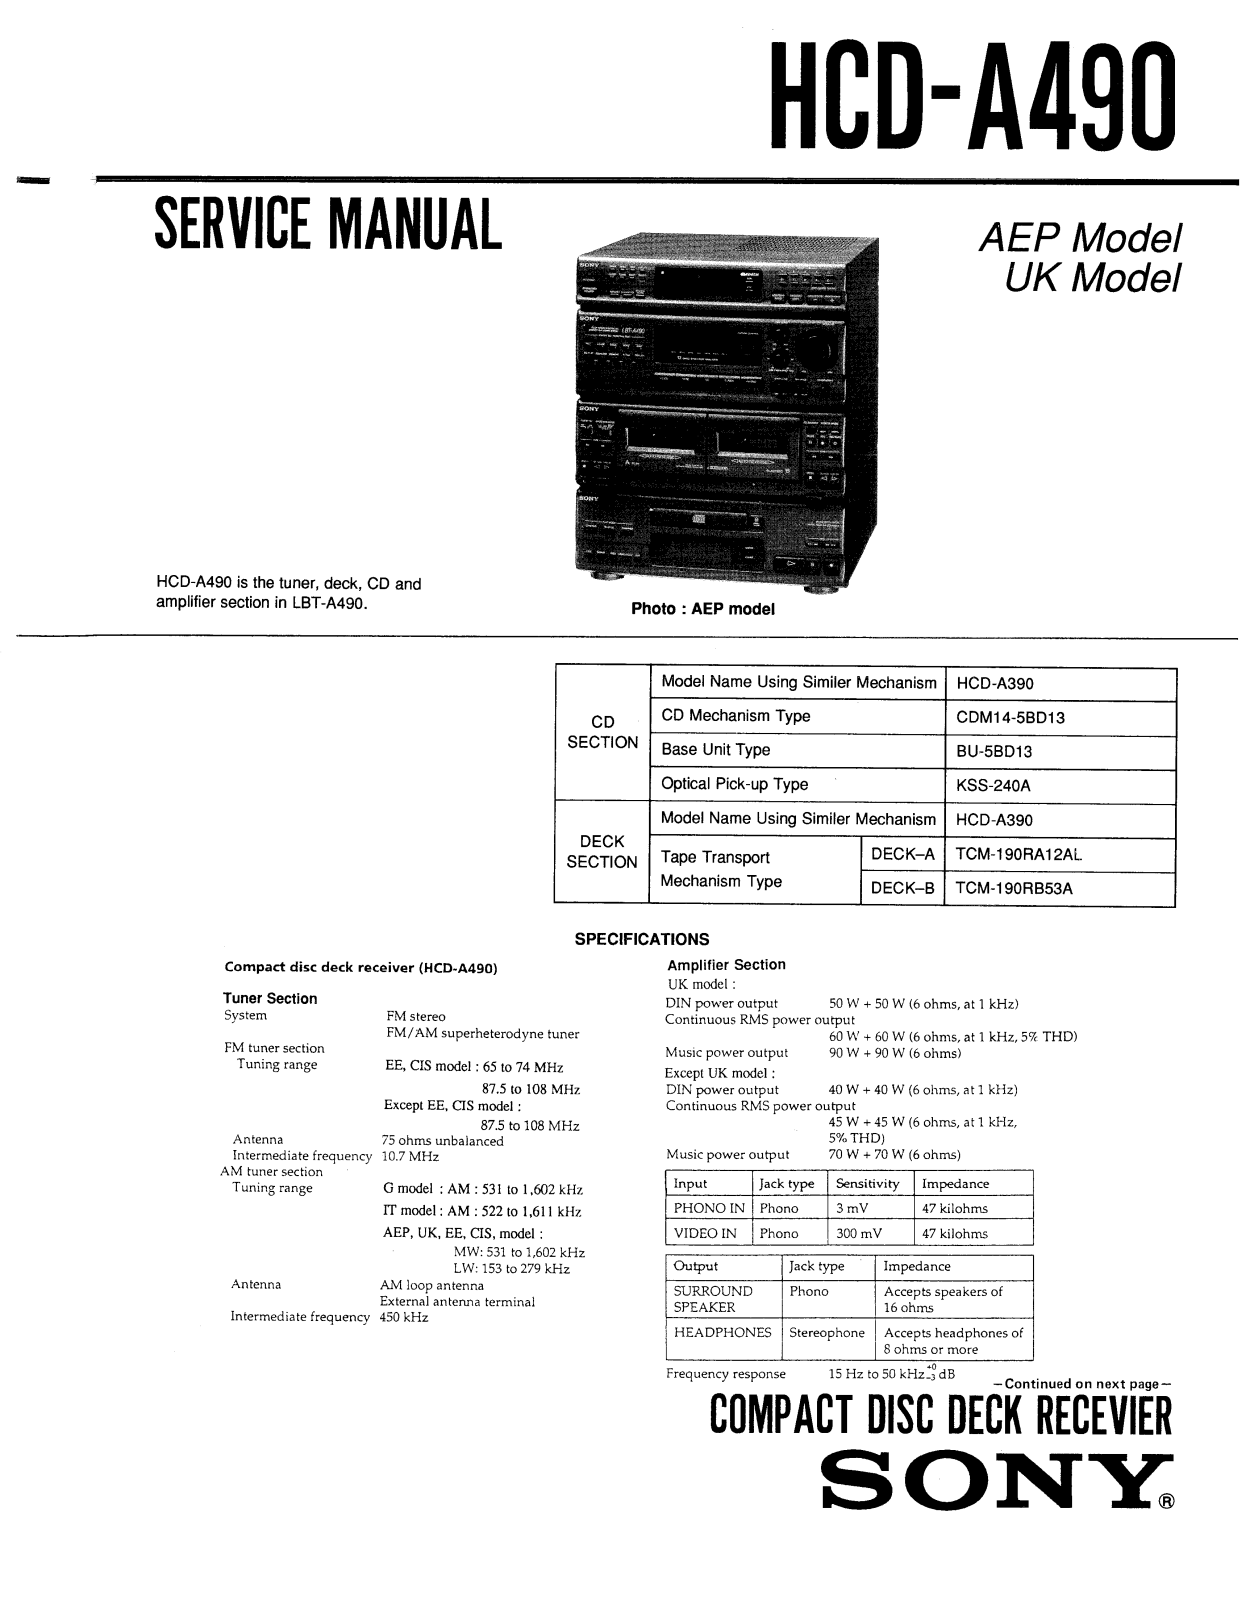 Sony HCDA-490 Service manual